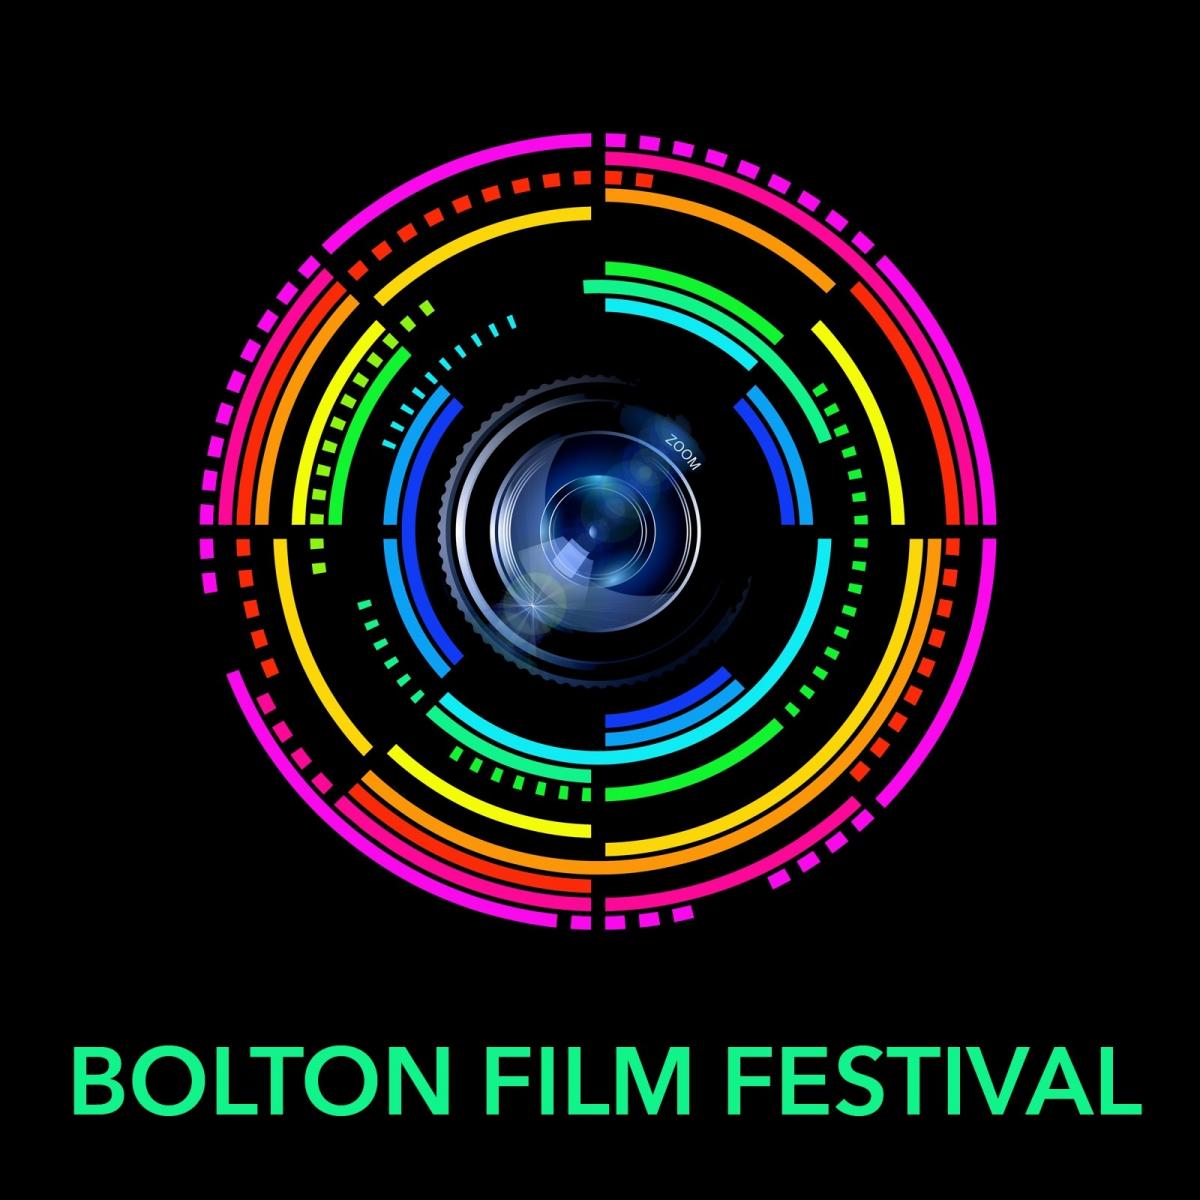 UoB presence at Bolton film festival